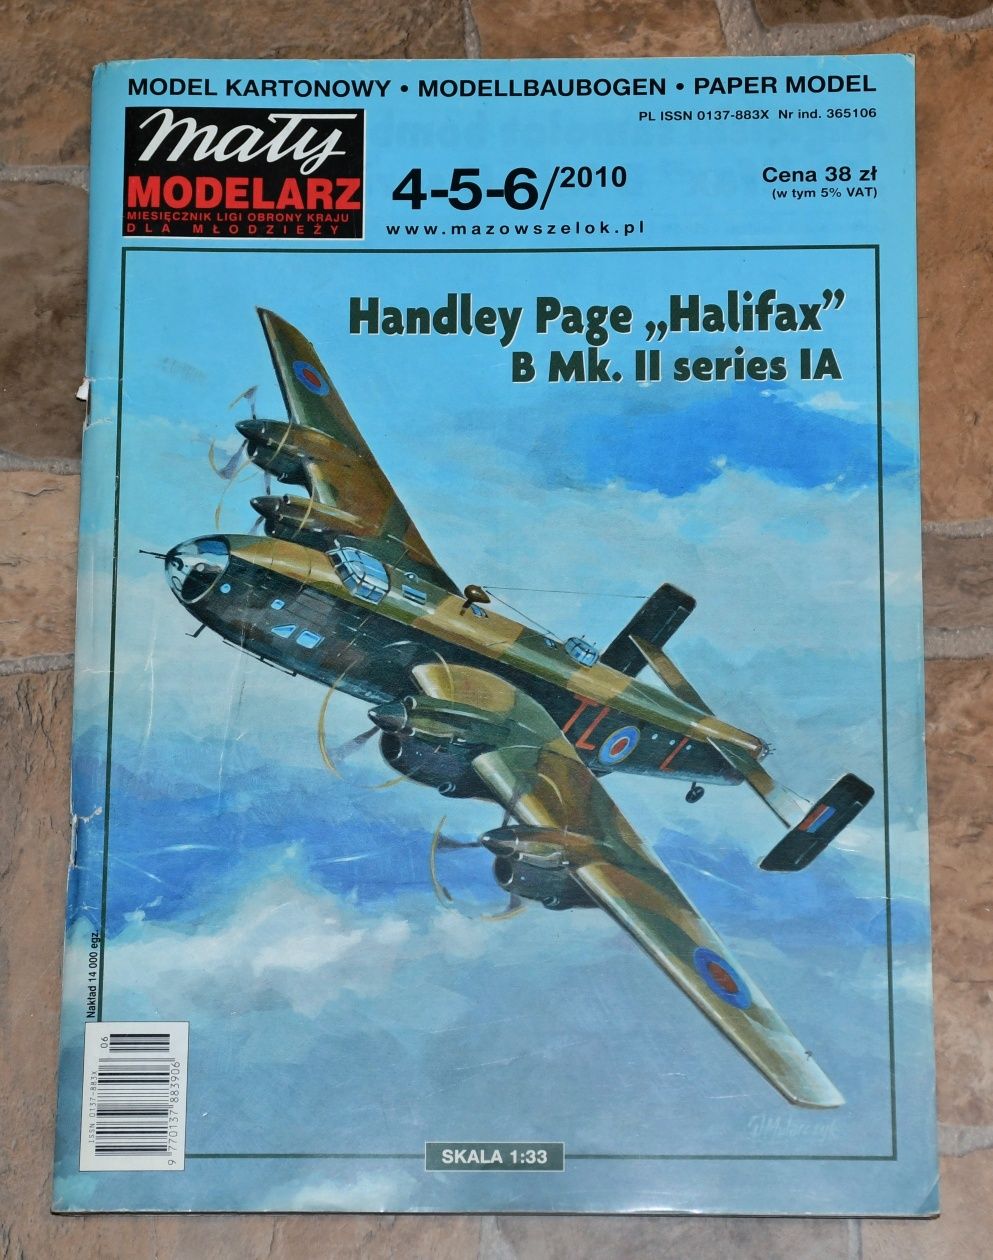 MM 4-5-6/2010 Handley Page "Halifax"